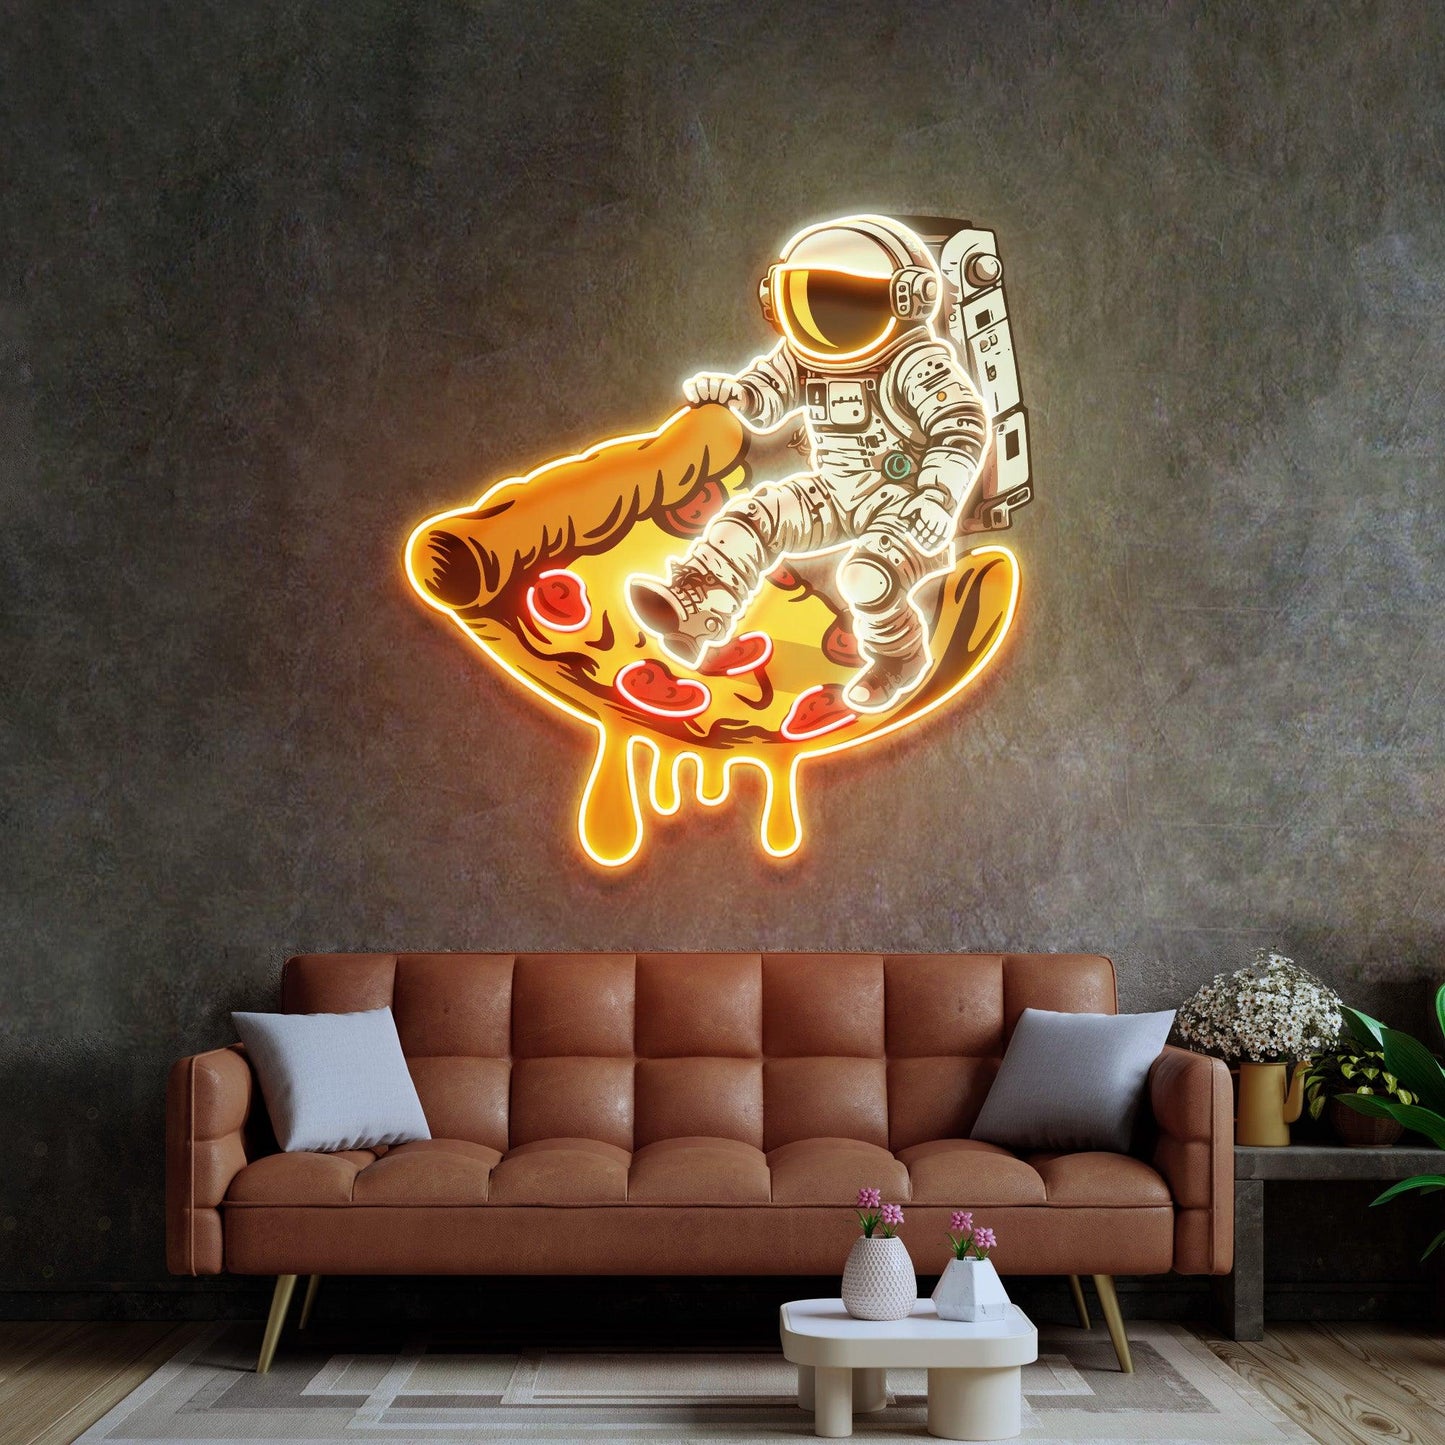 Astronaut on Pizza Mat Led Neon Acrylic Artwork - Neonzastudio